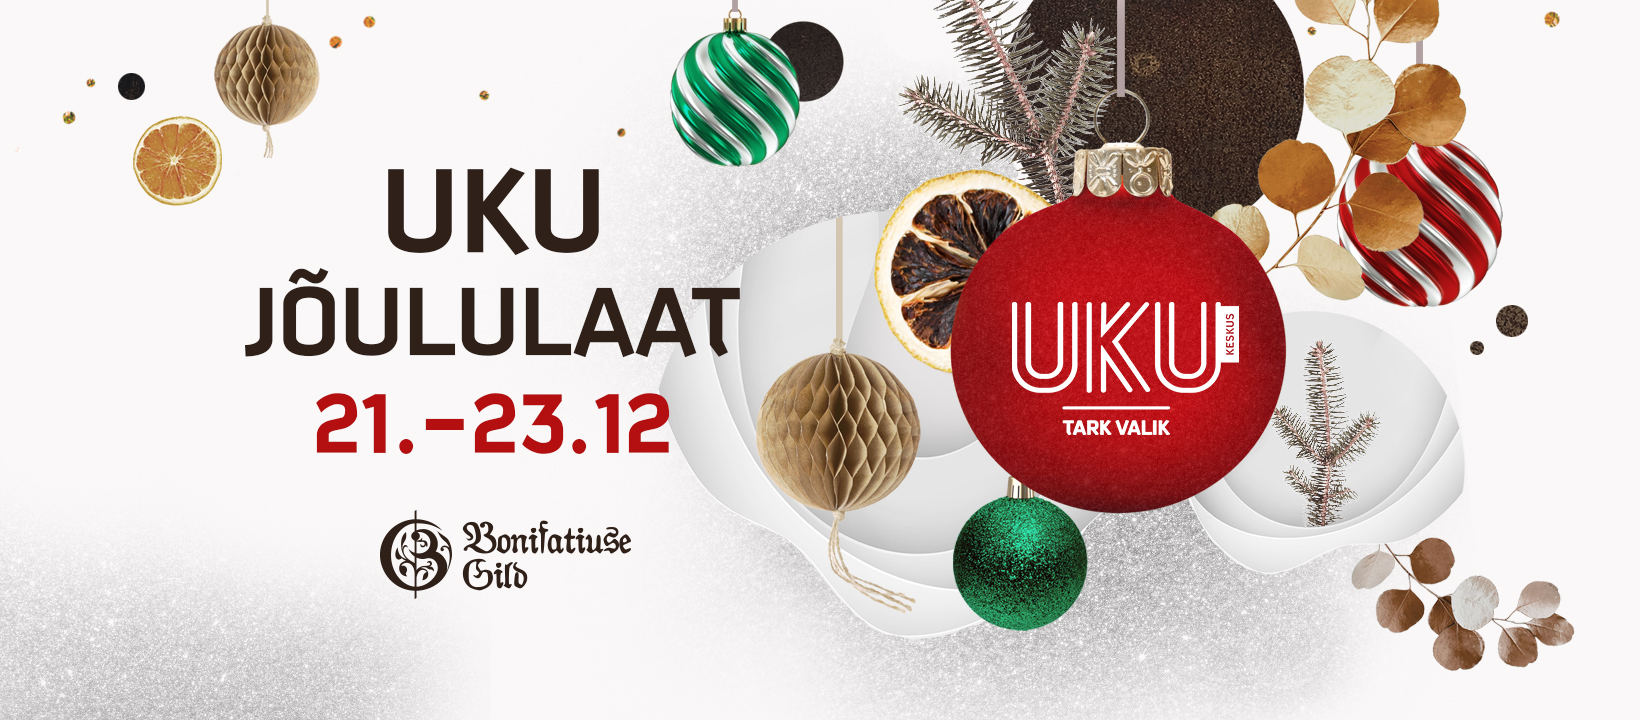 Viljandi’s three-day Christmas market begins tomorrow